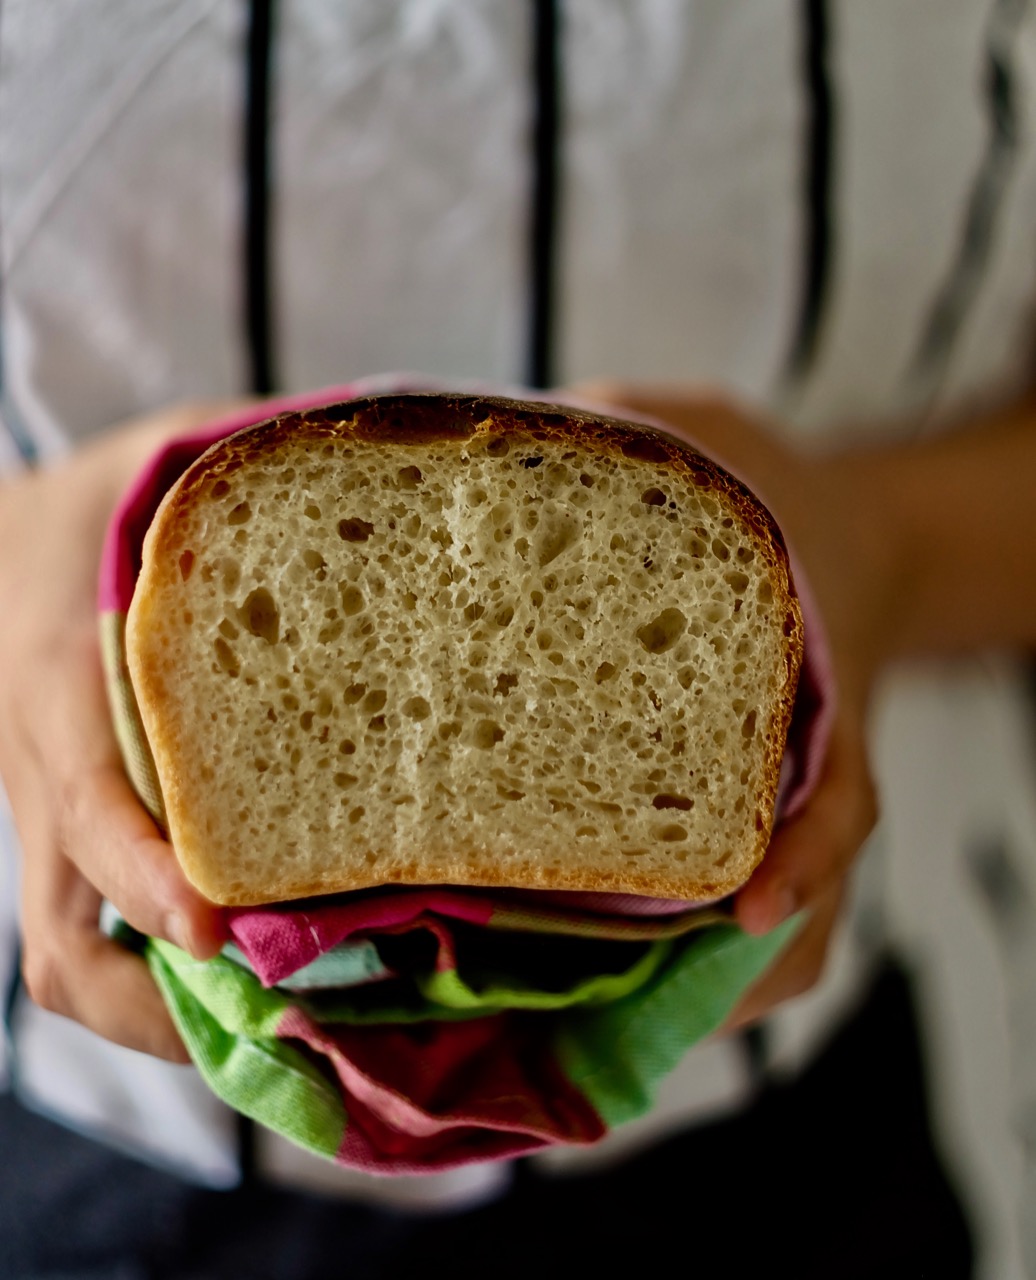 https://urbanfoodlover.com/wp-content/uploads/2020/04/cross-section-of-bread-loaf.jpg